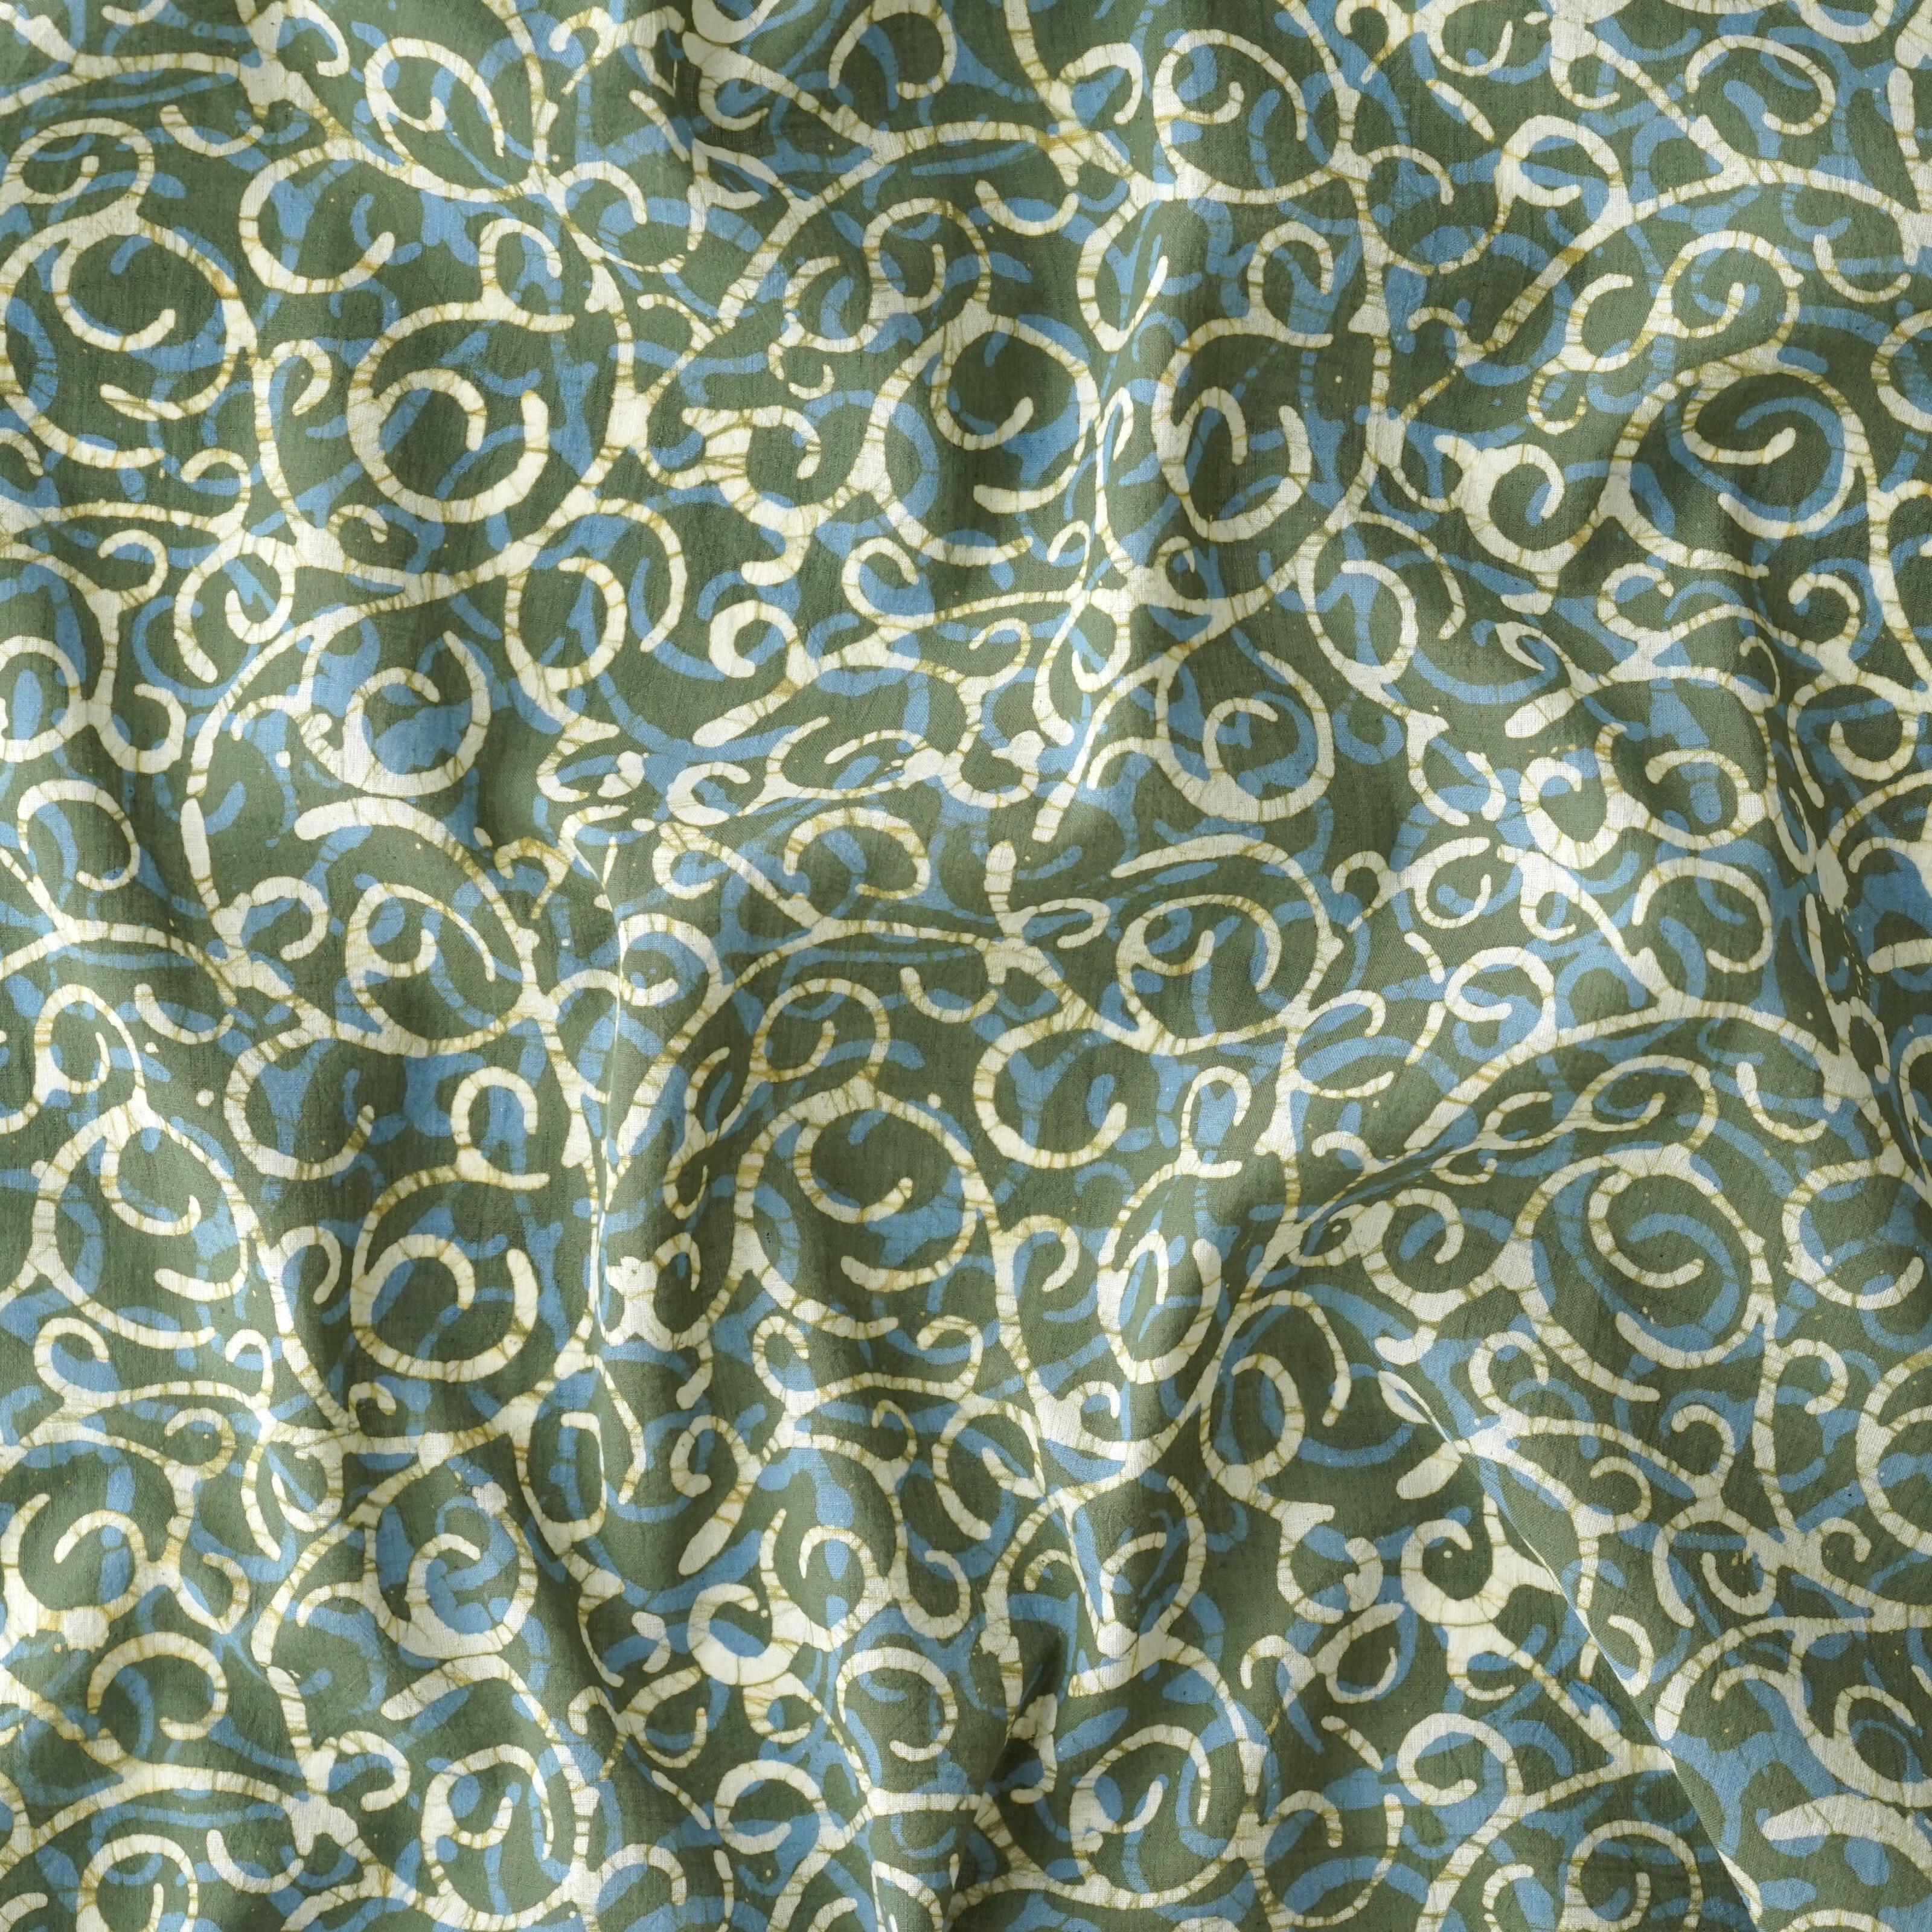 Block-Printed Batik Cotton Fabric From India - Aurora Design - Reactive Dye - Contrast